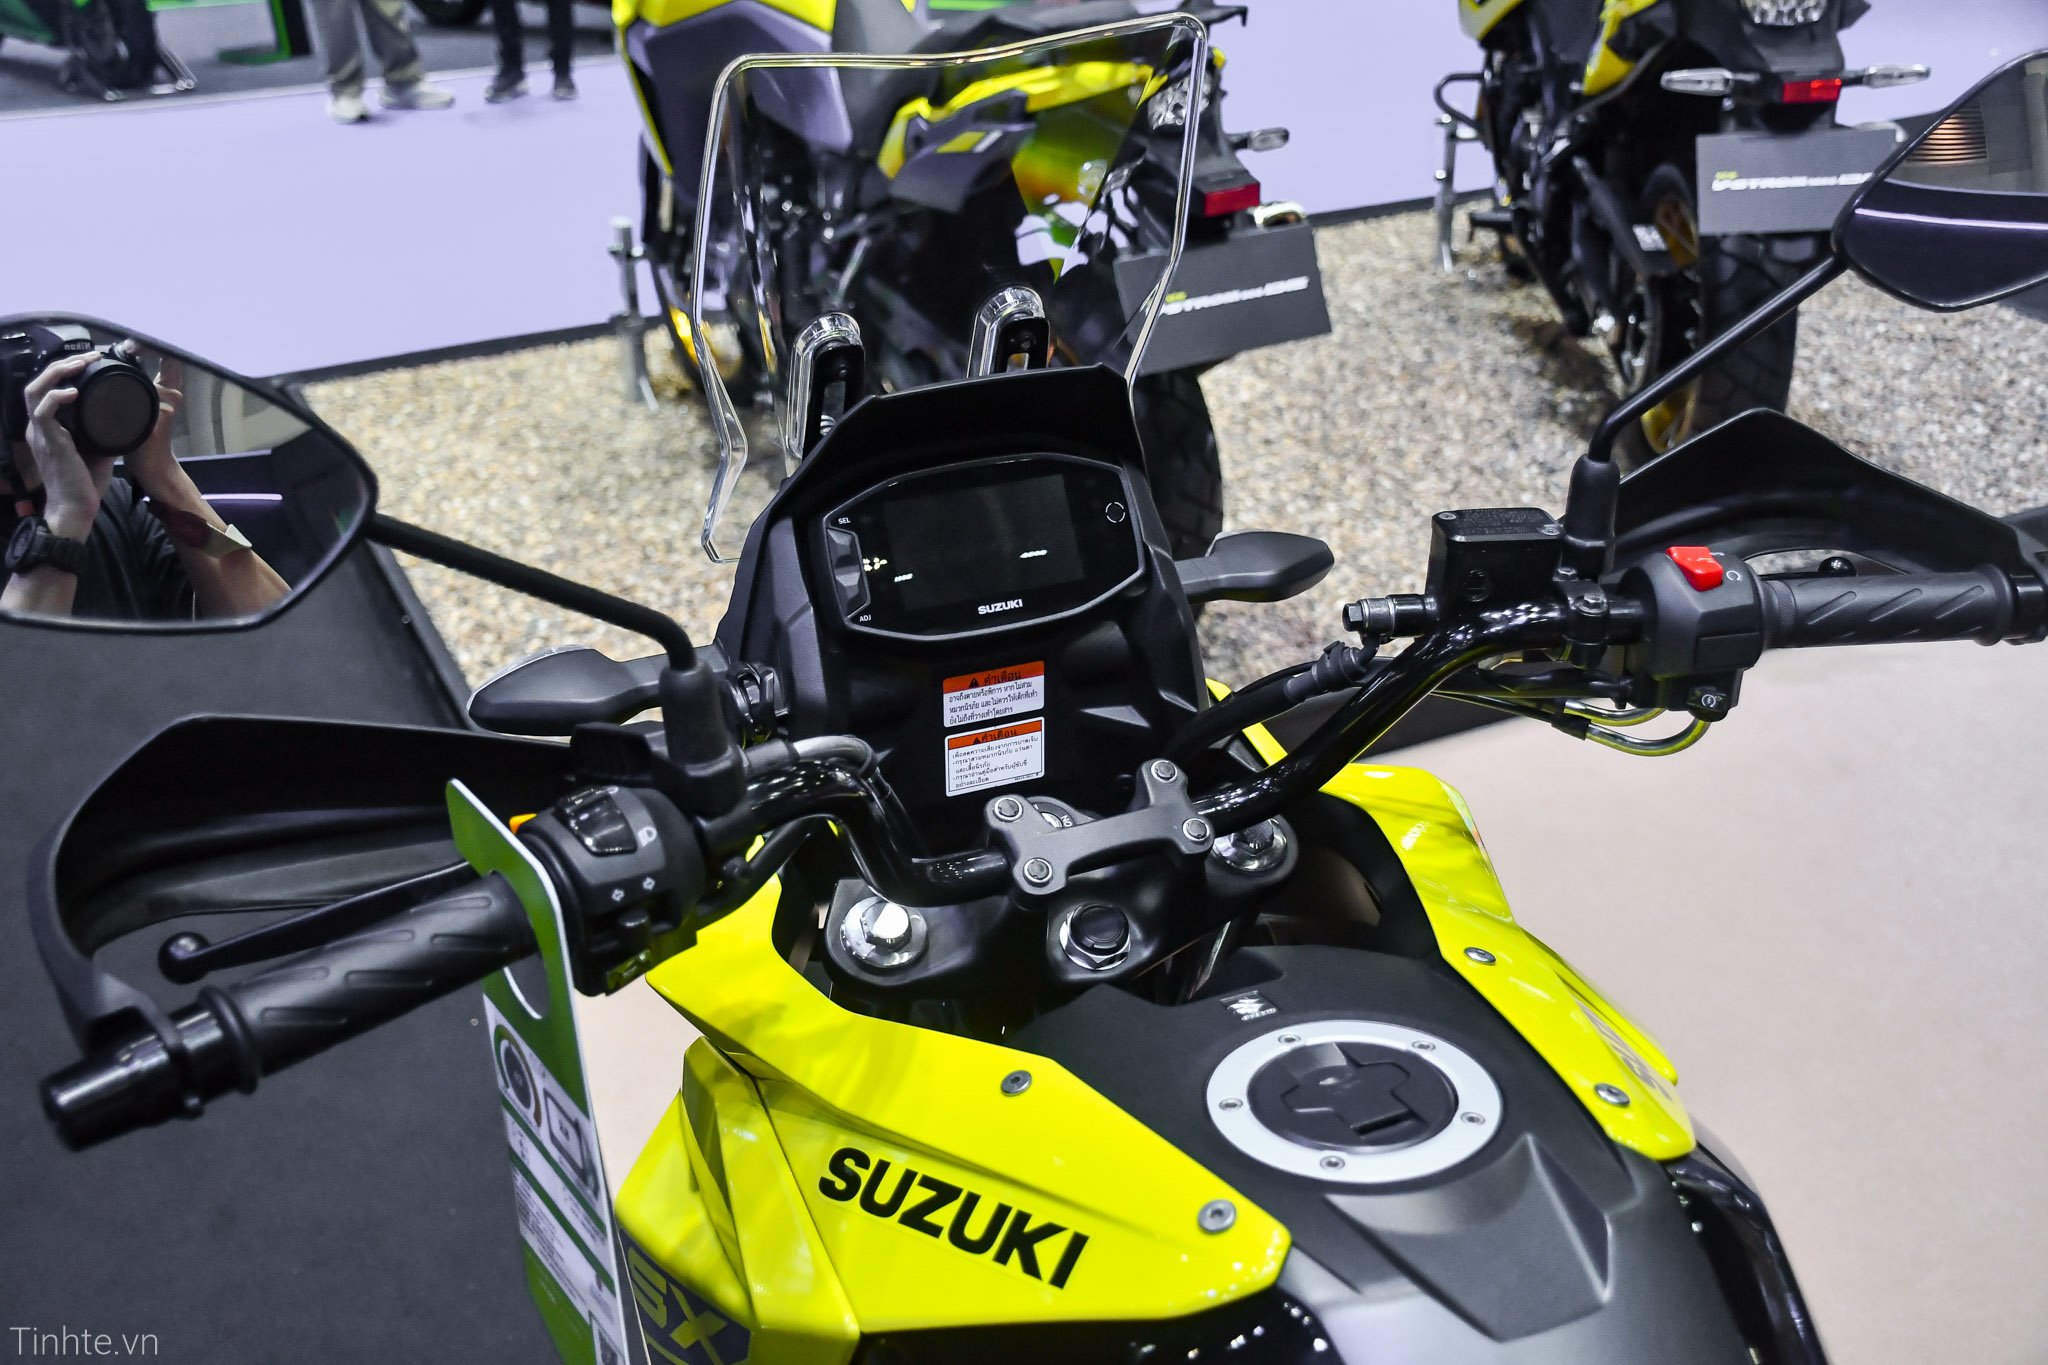 Suzuki-V-Strom-250-SX-tinhte-3.jpg